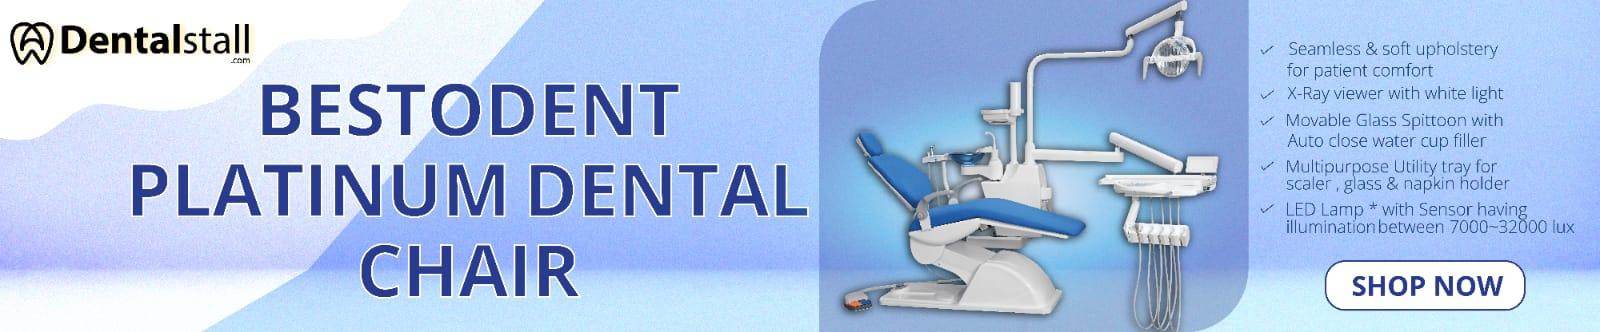 buy dental products online - Dentalstall dental store online india